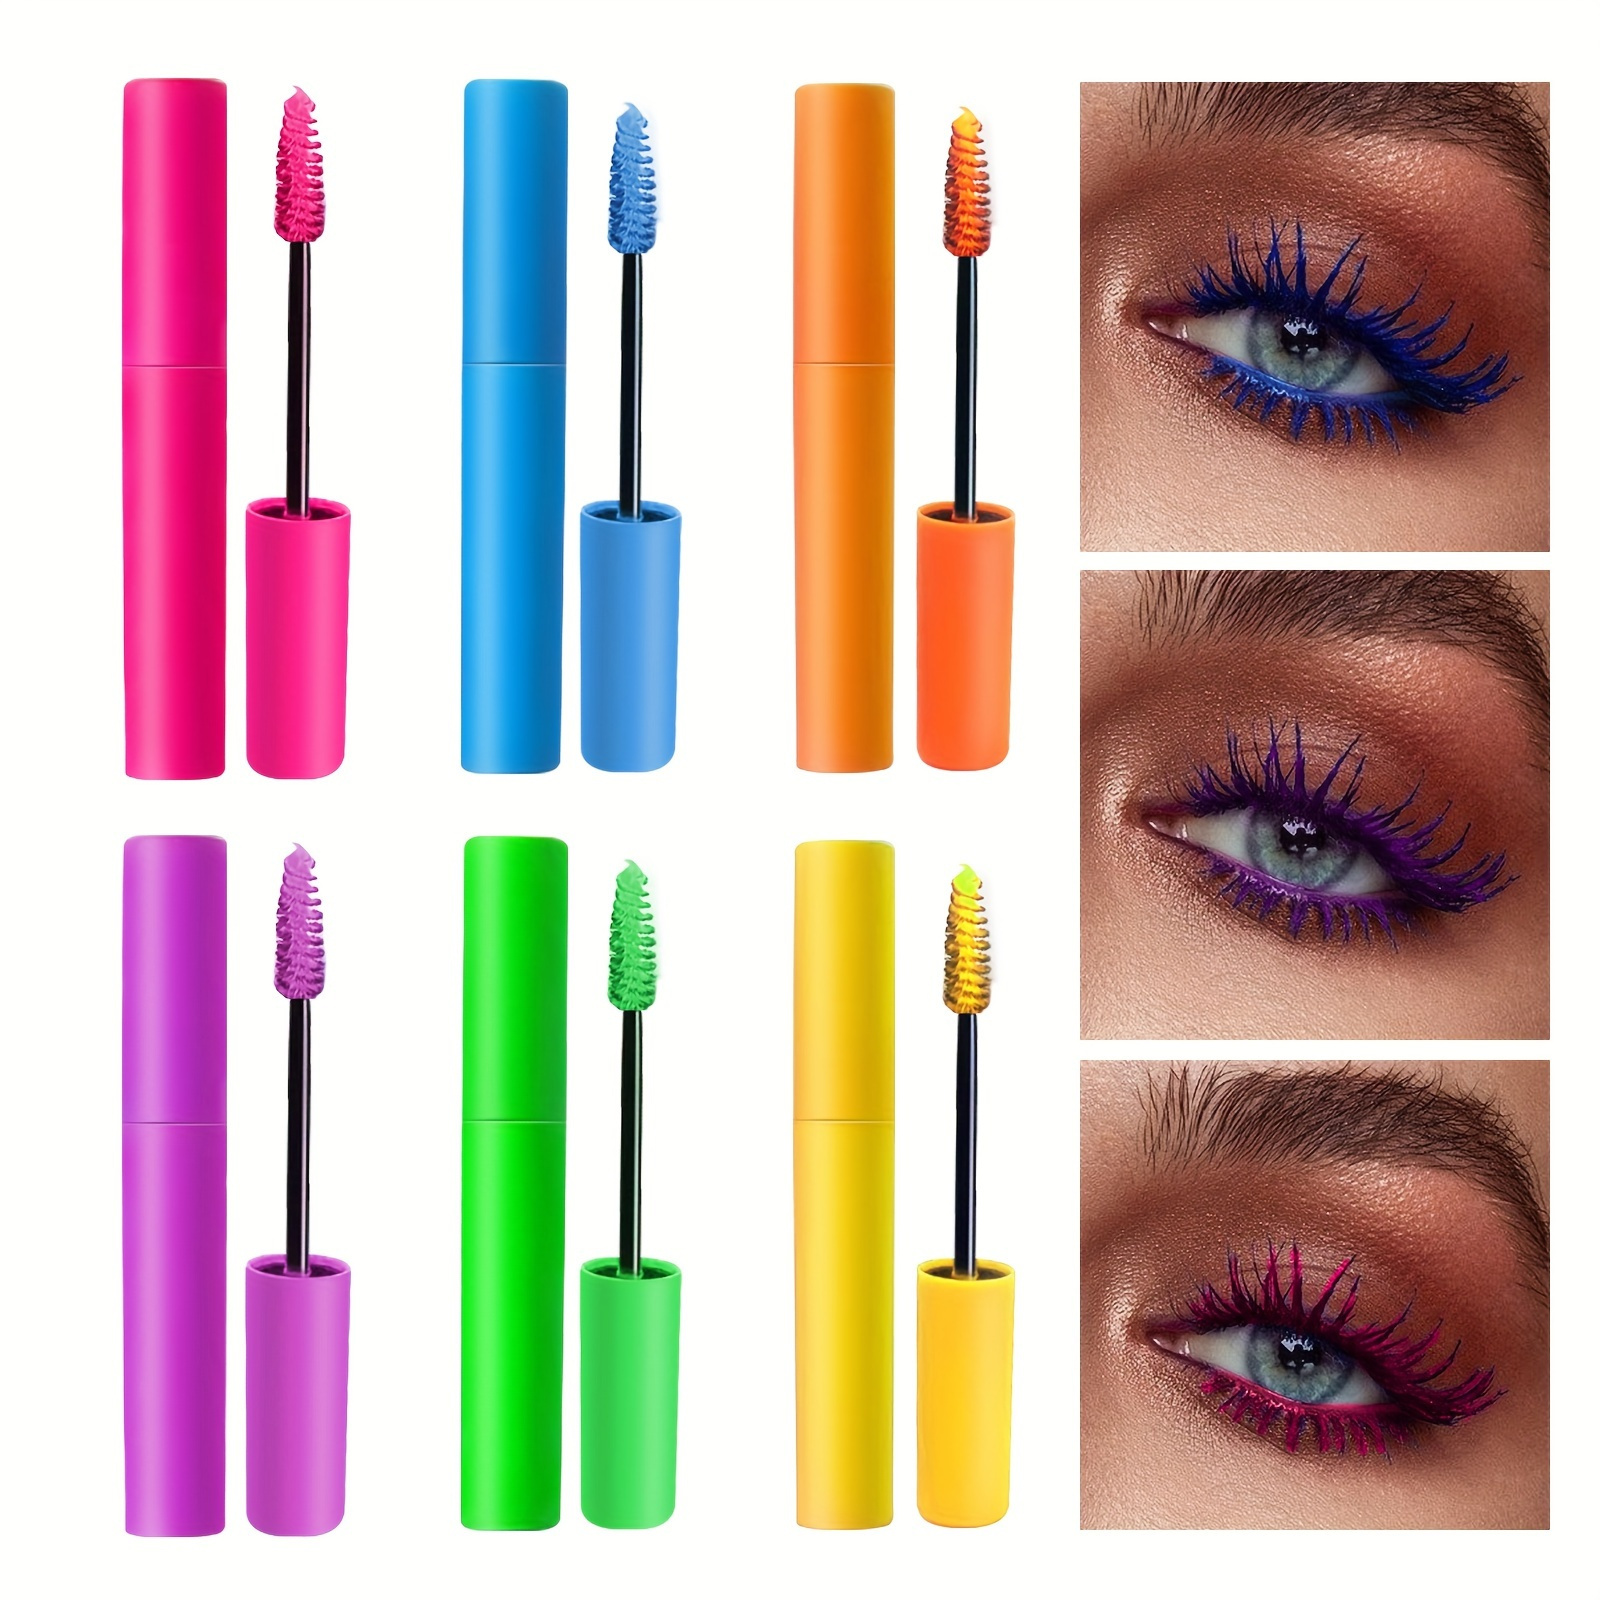 

6 Colors Mascara Rainbow Color Waterproof Mascara Silk Fiber Lash Extensions Mascara, Natural Look Mascara 0.26 Fl Oz (6 Pcs)